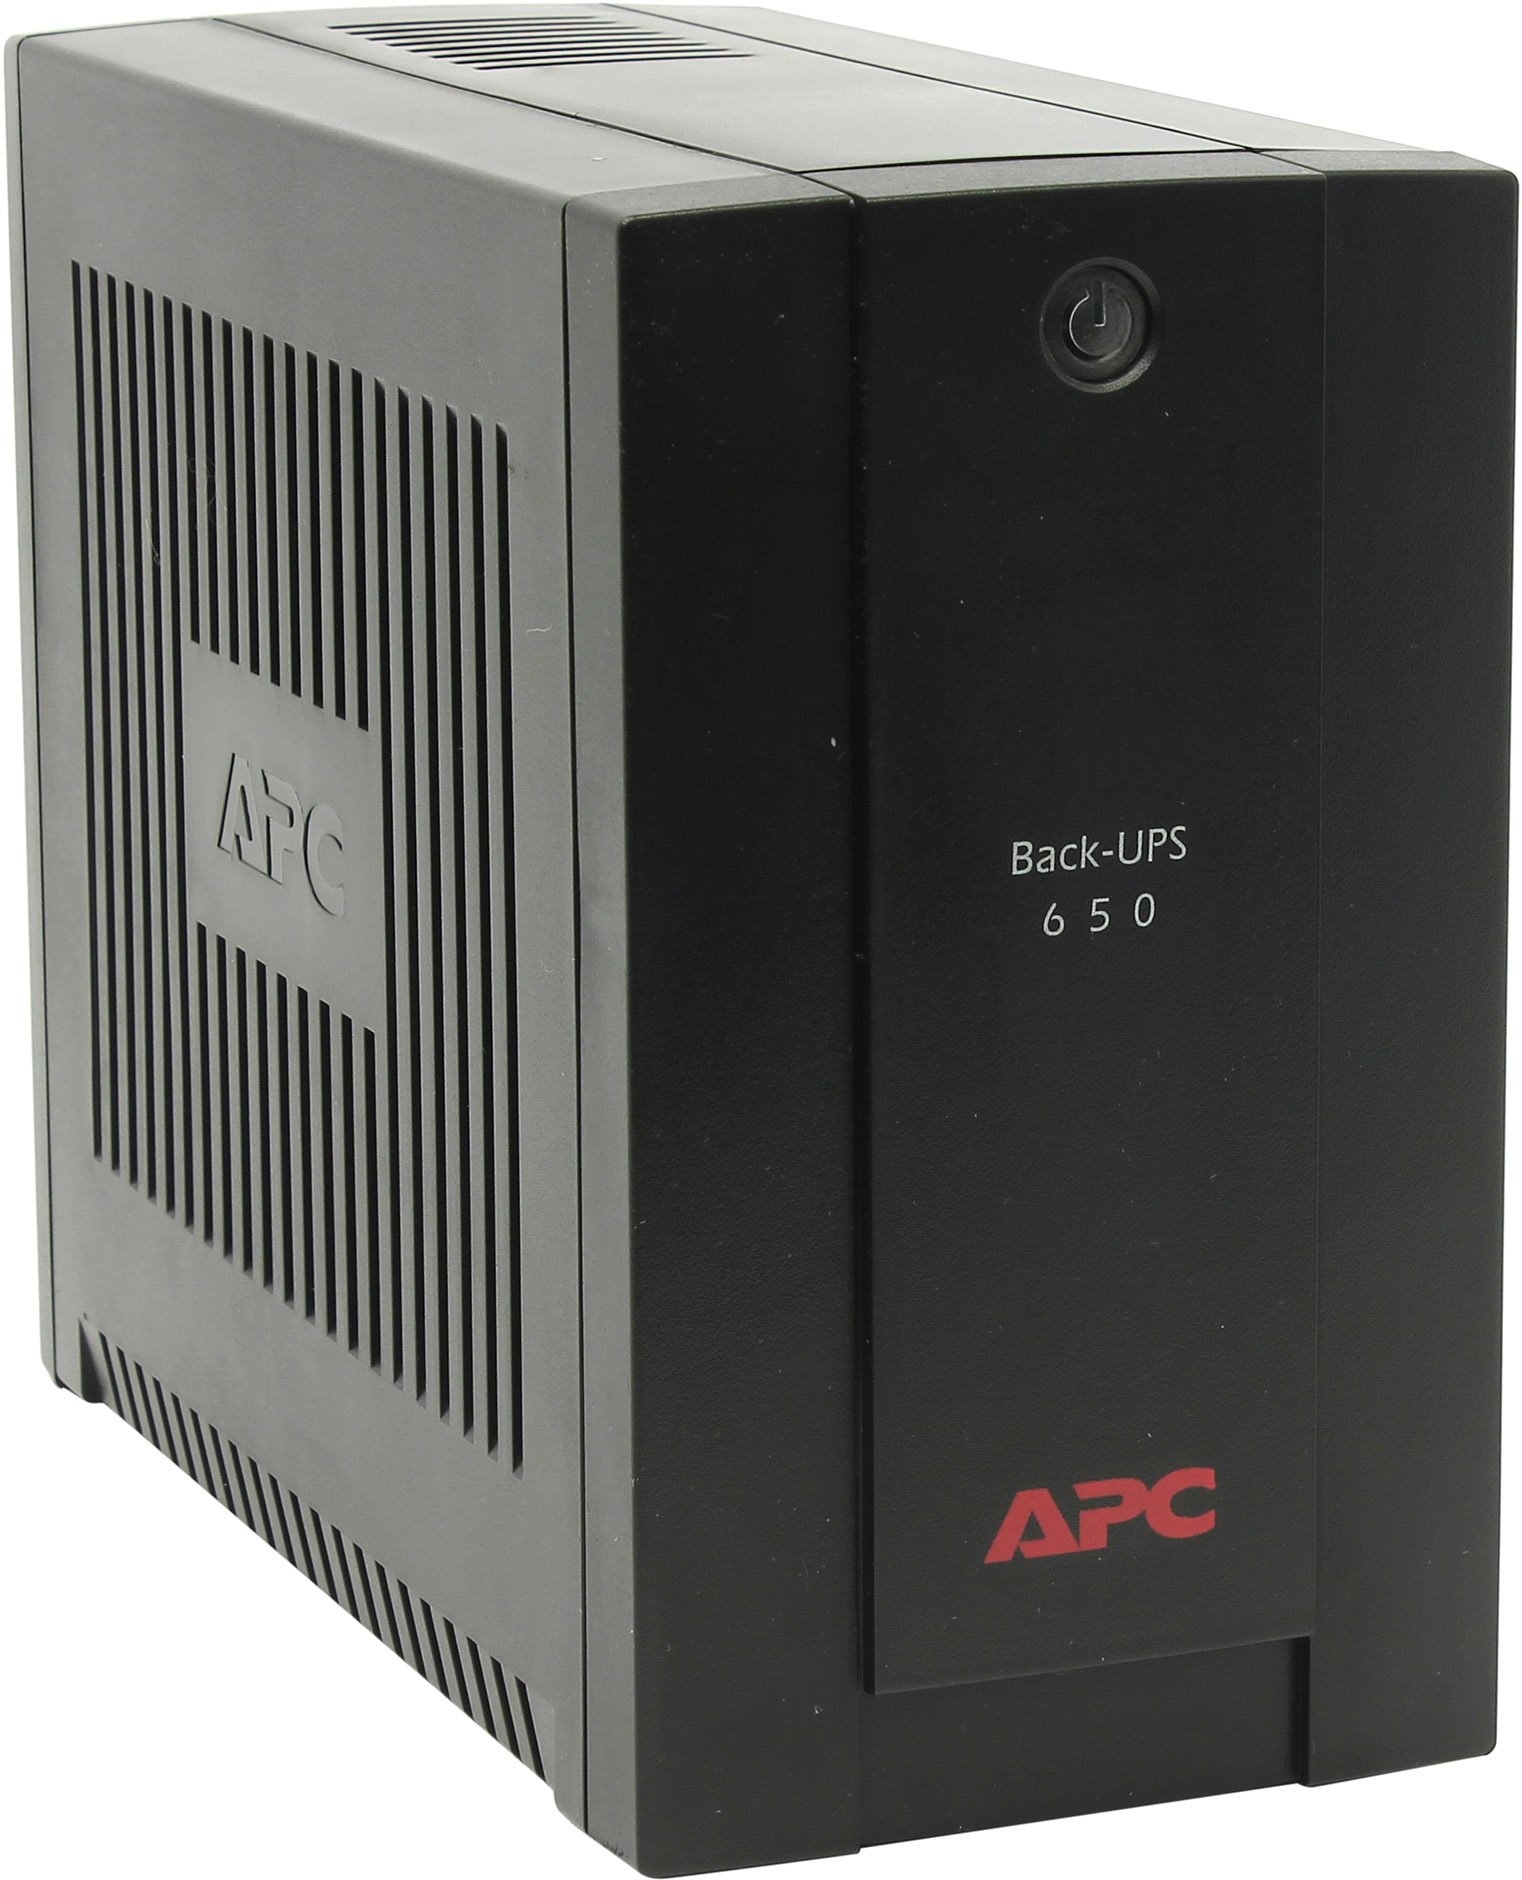 650 bx. APC back ups 650. Ups 650va back APC. APC back ups RS 650. АРС back-ups bc650-RS.